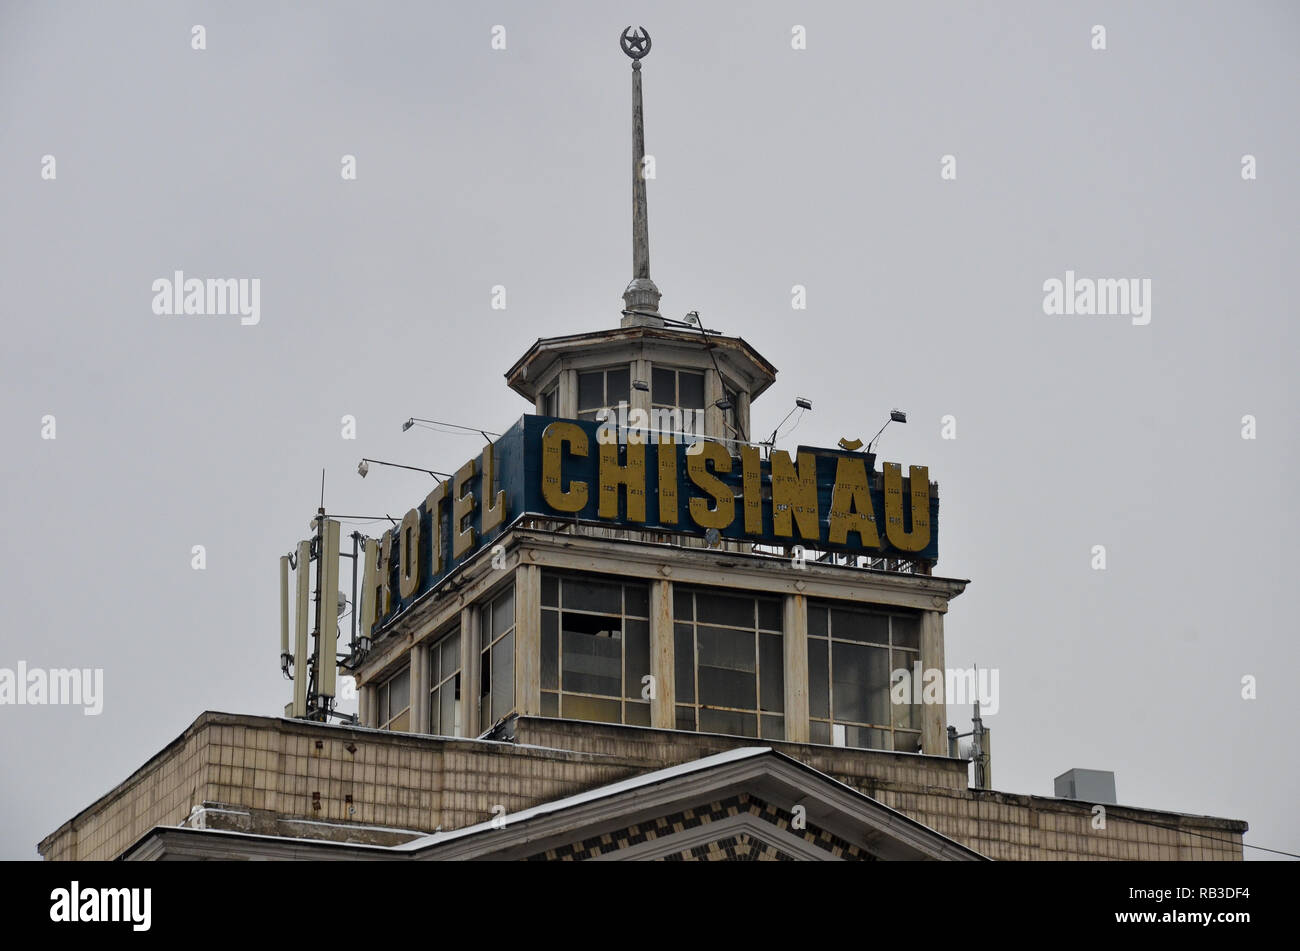 Hotel Chisinau anzumelden, Chisinau (Chisinau), der Republik Moldau, November 2018 Stockfoto